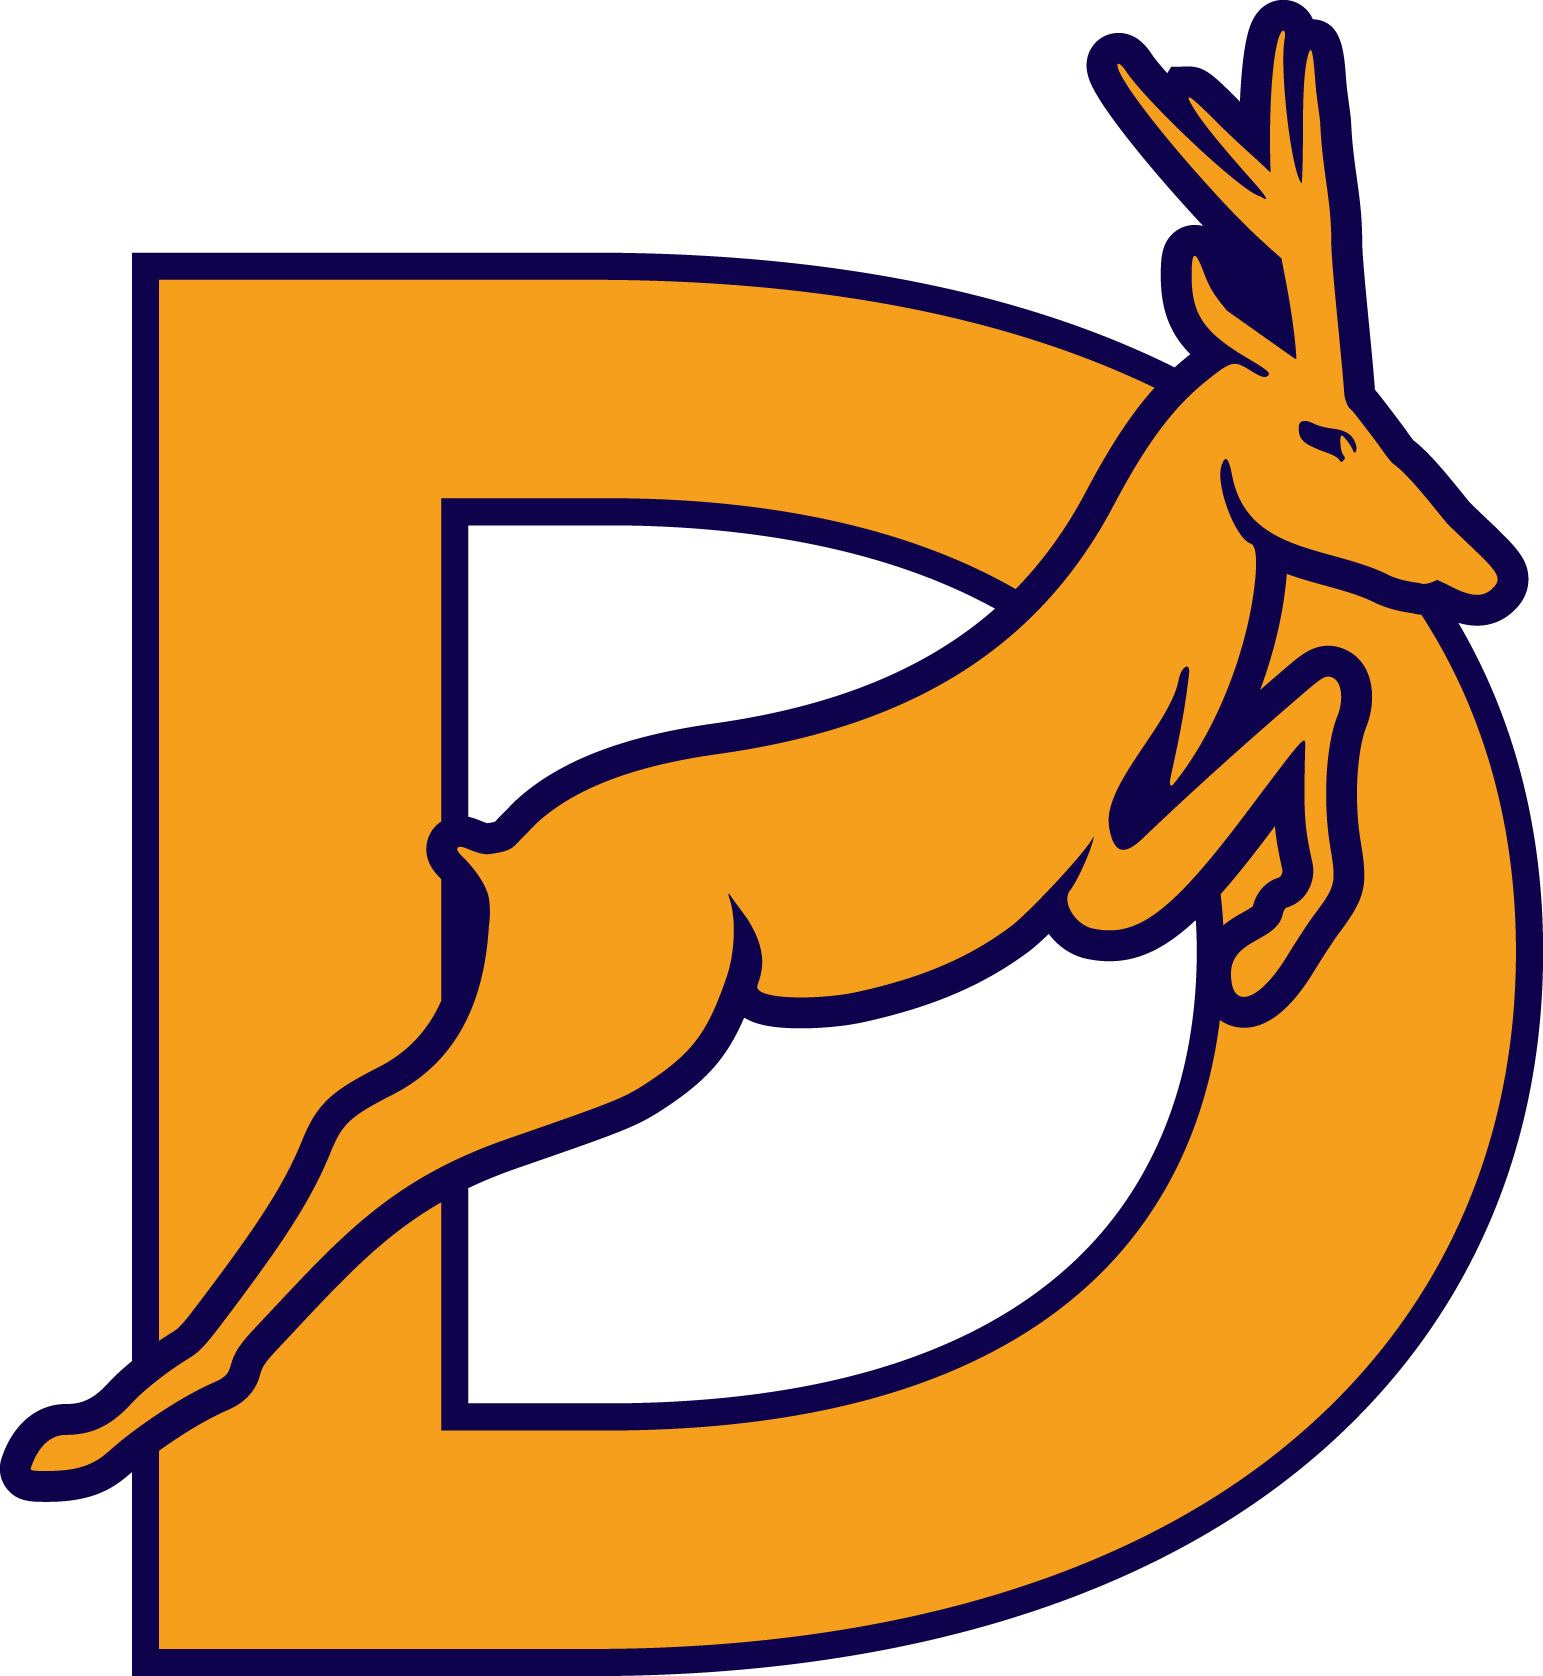 The Deanes School校徽